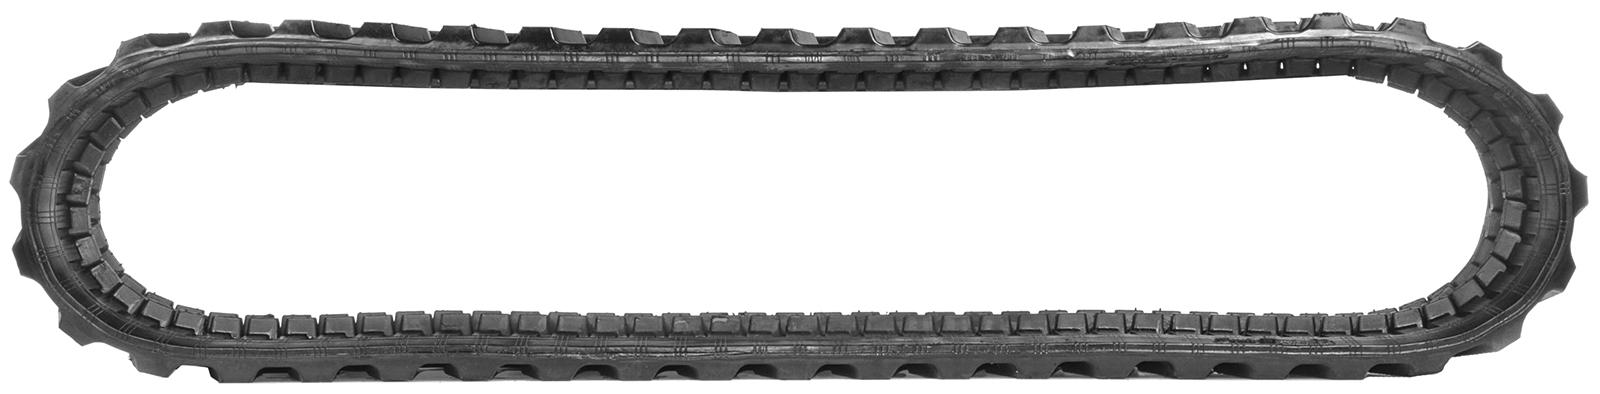 set of 2 14" heavy duty rubber track (350x52.5wx90)